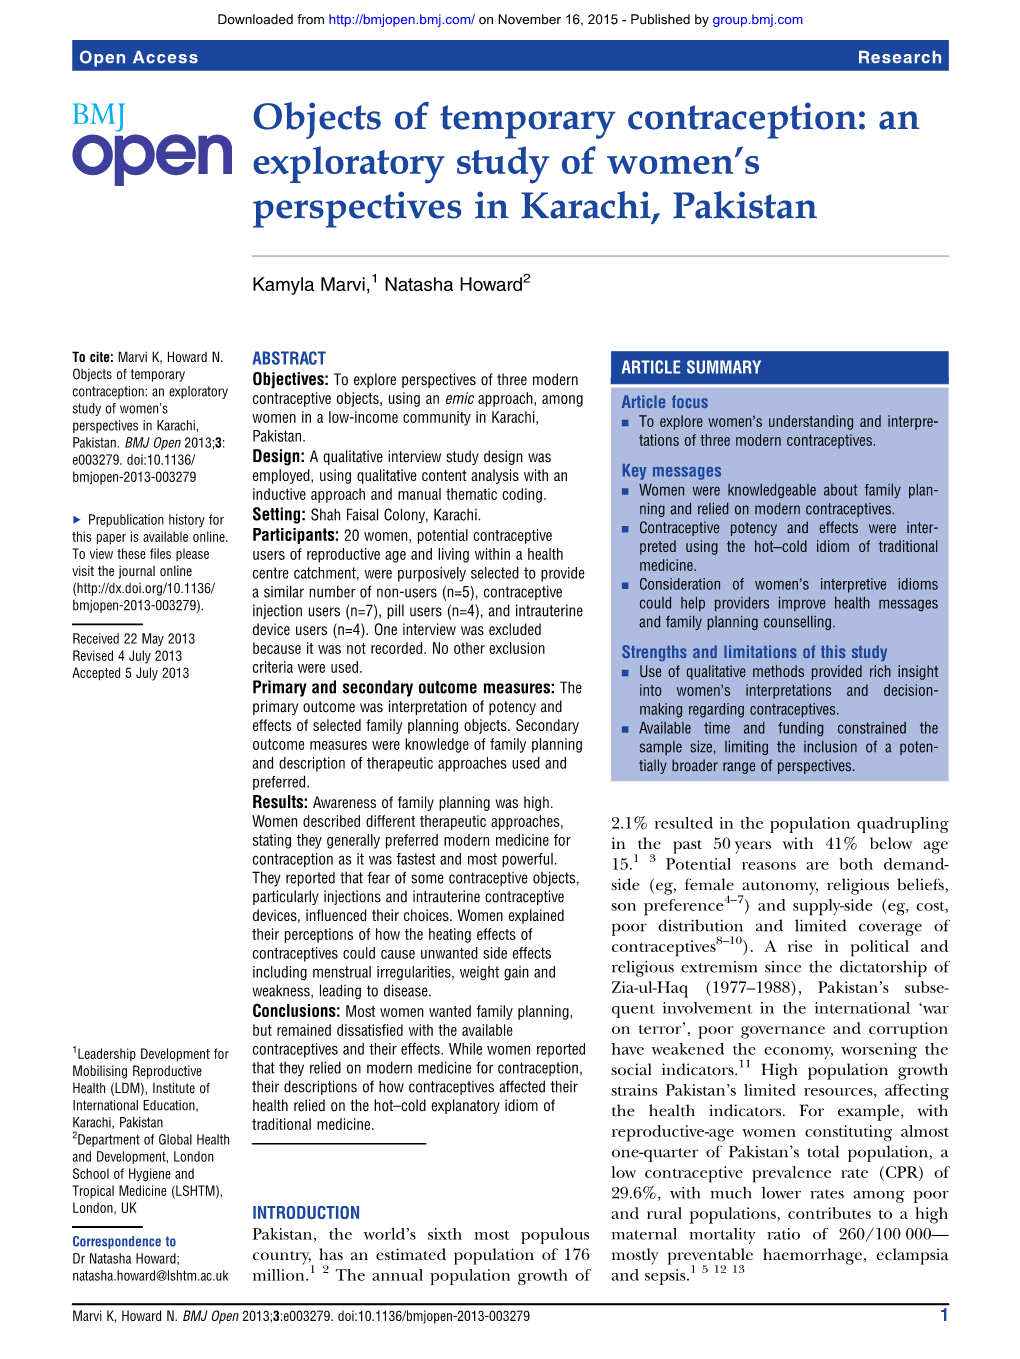 Objects of Temporary Contraception: an Exploratory Study of Women's Perspectives in Karachi, Pakistan Kamyla Marvi and Natasha Howard